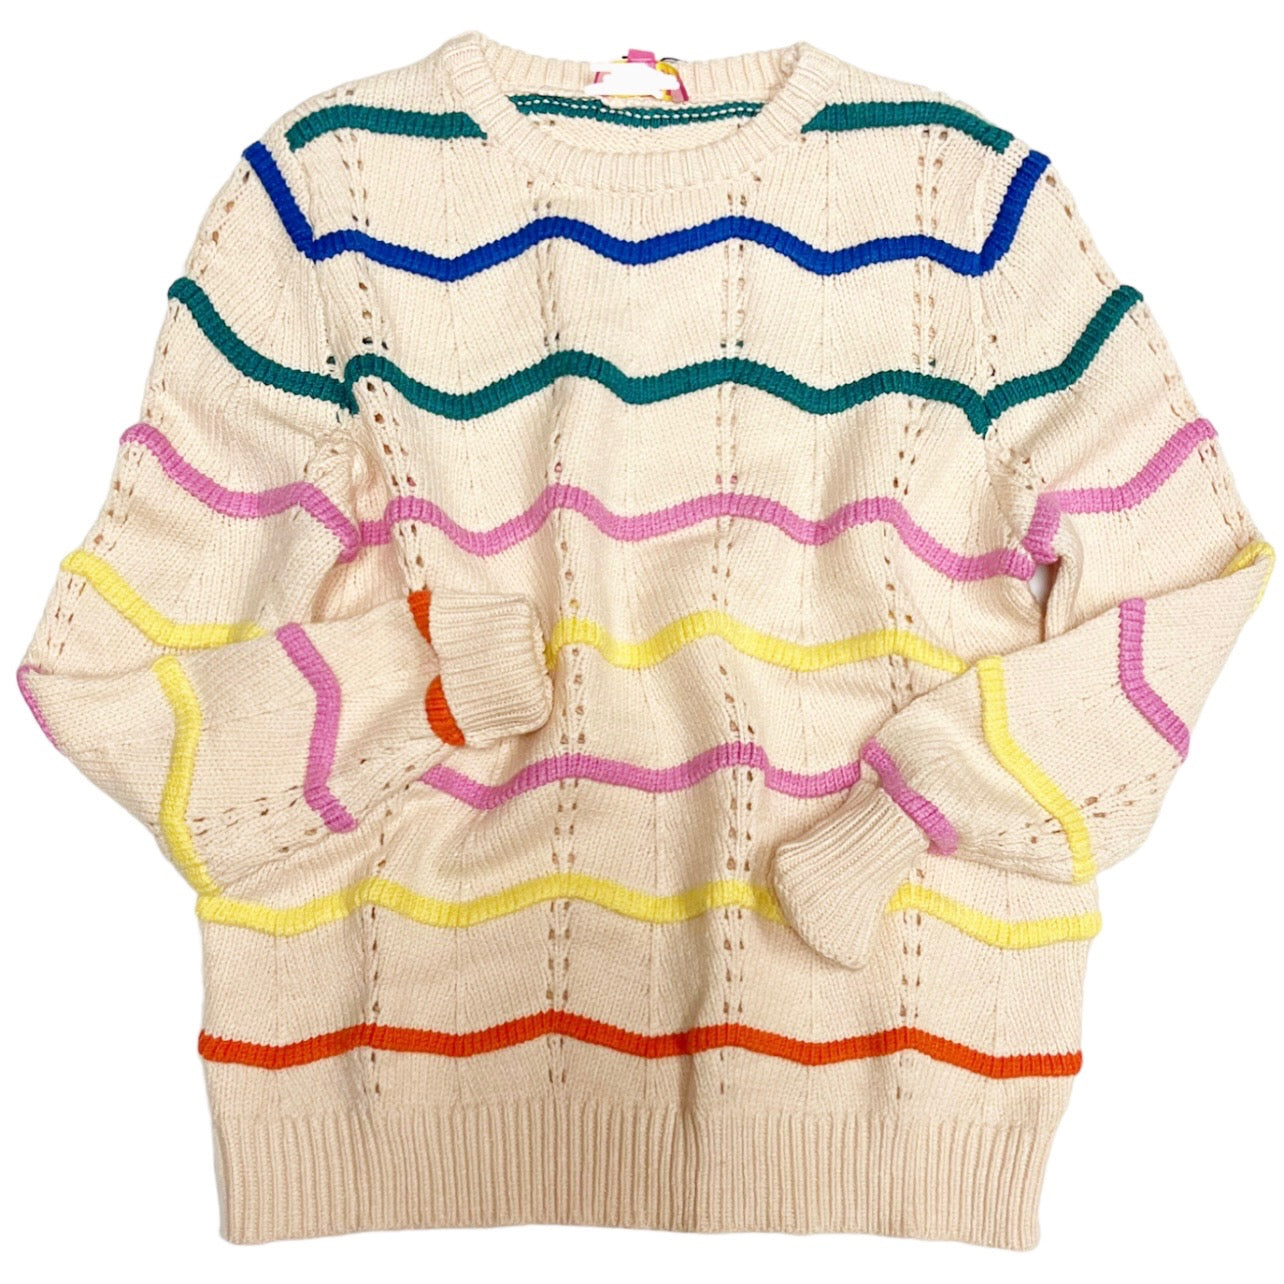 Lizzie Striped Sweater